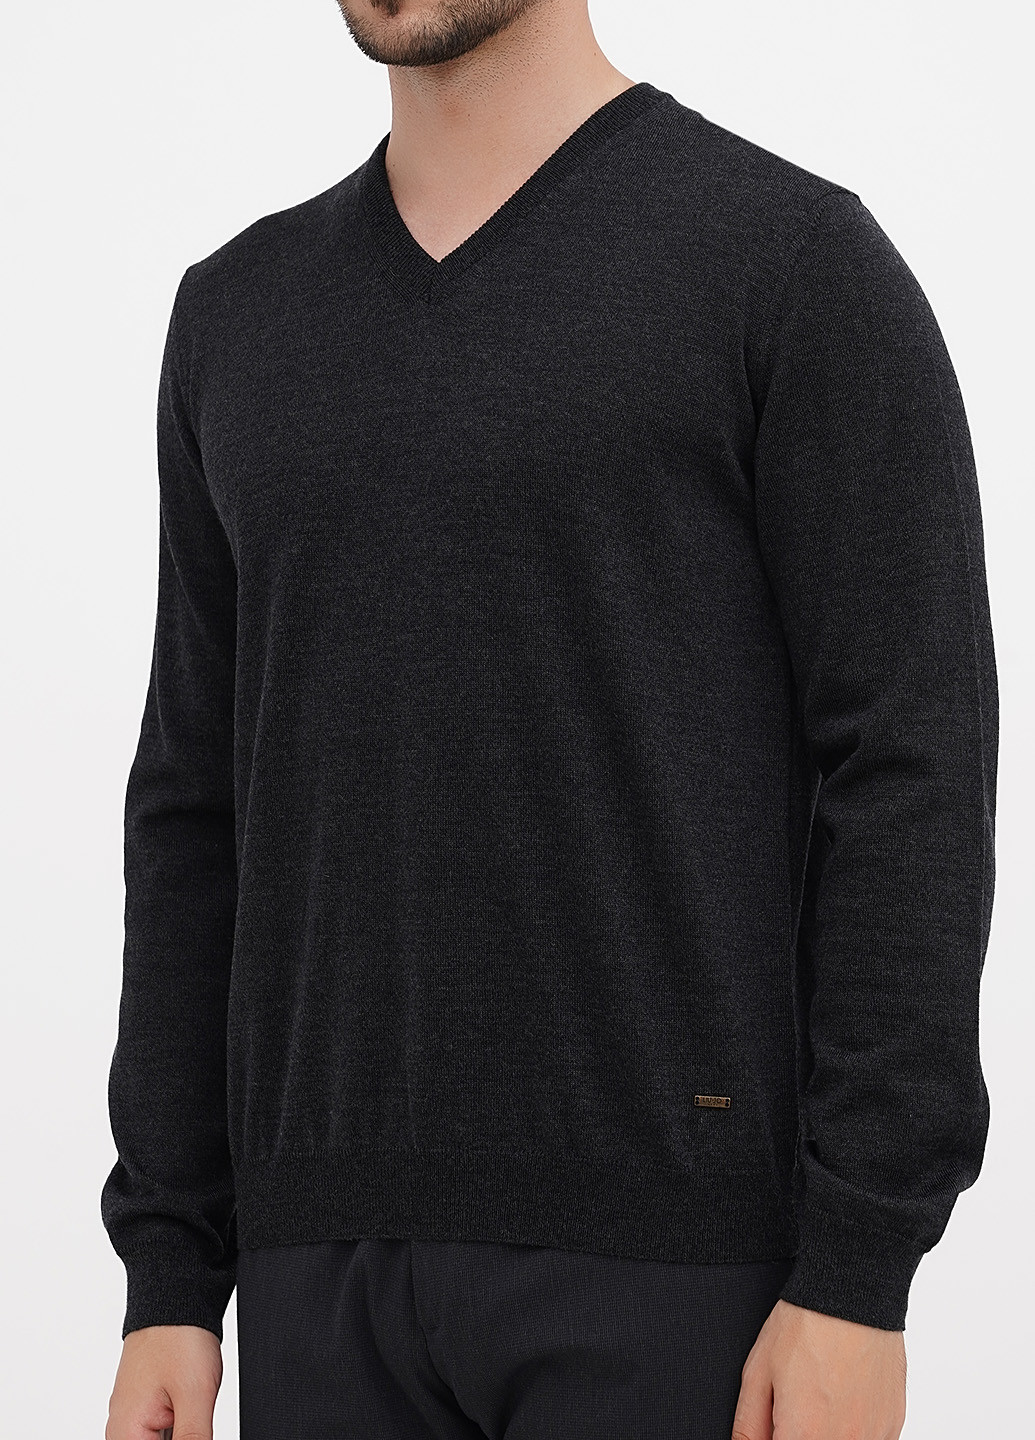 Темно-серый демисезонный пуловер пуловер Liu Jo